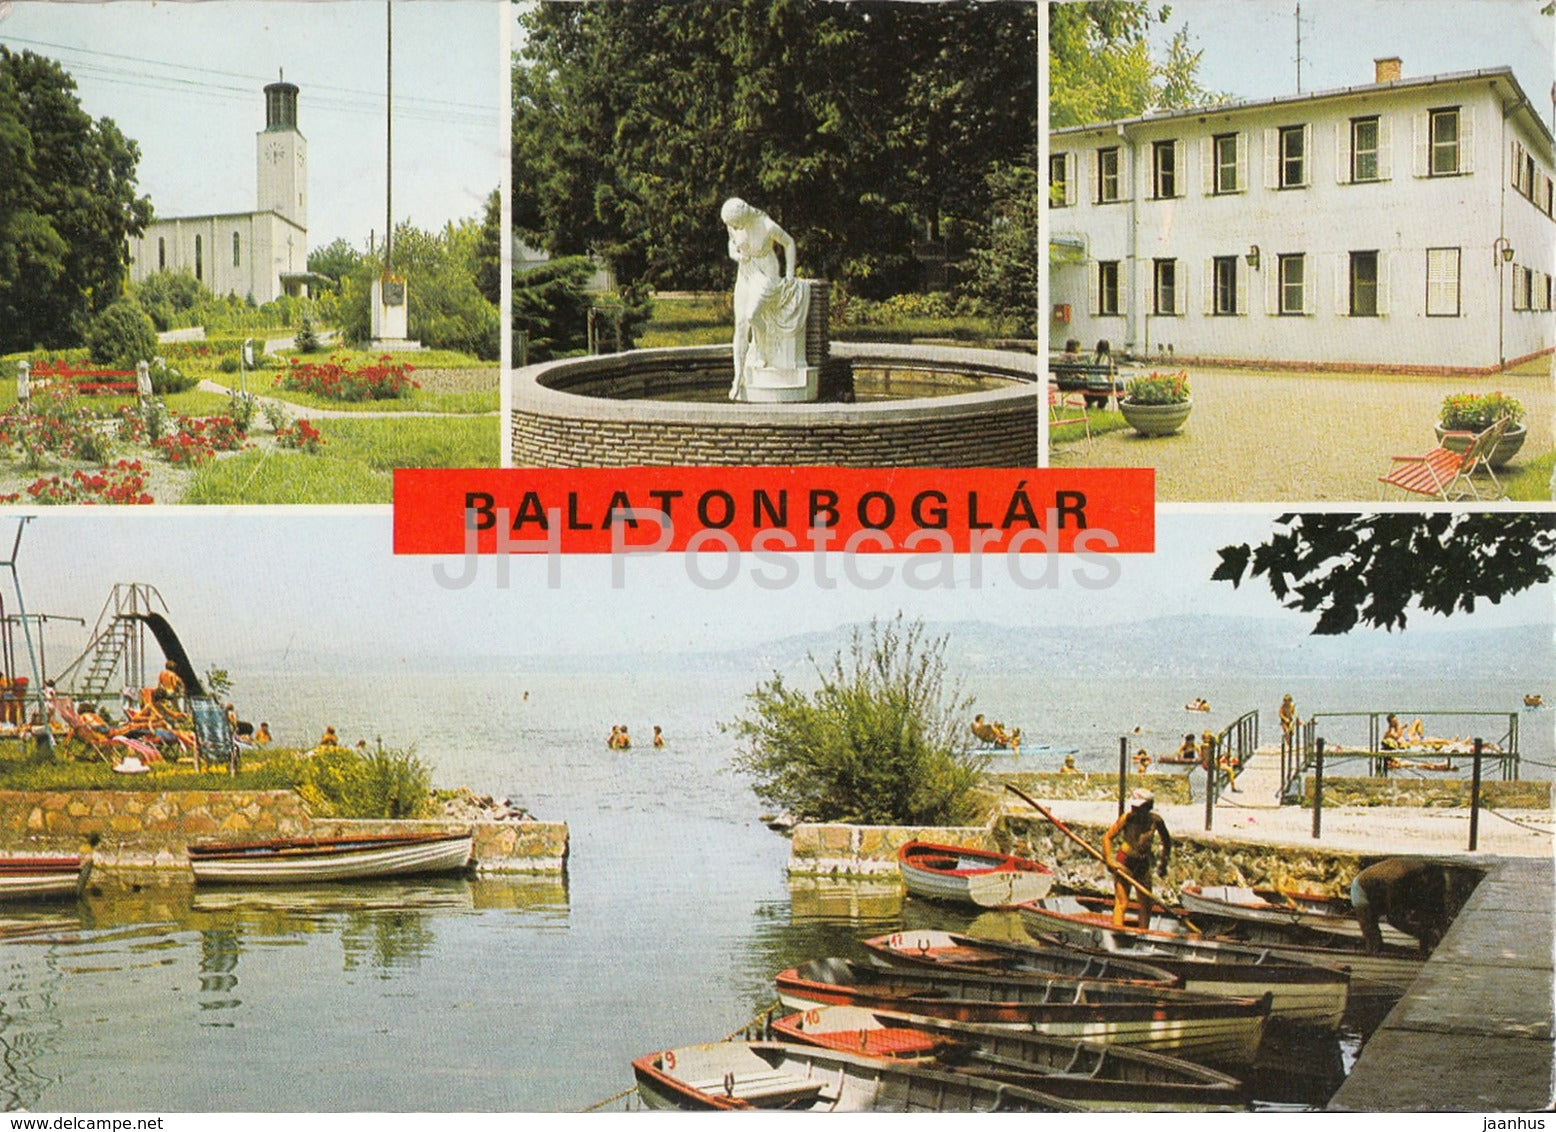 Balaton - Balatonboglar - boat - architecture - sculpture - multiview - 1979 - Hungary - used - JH Postcards